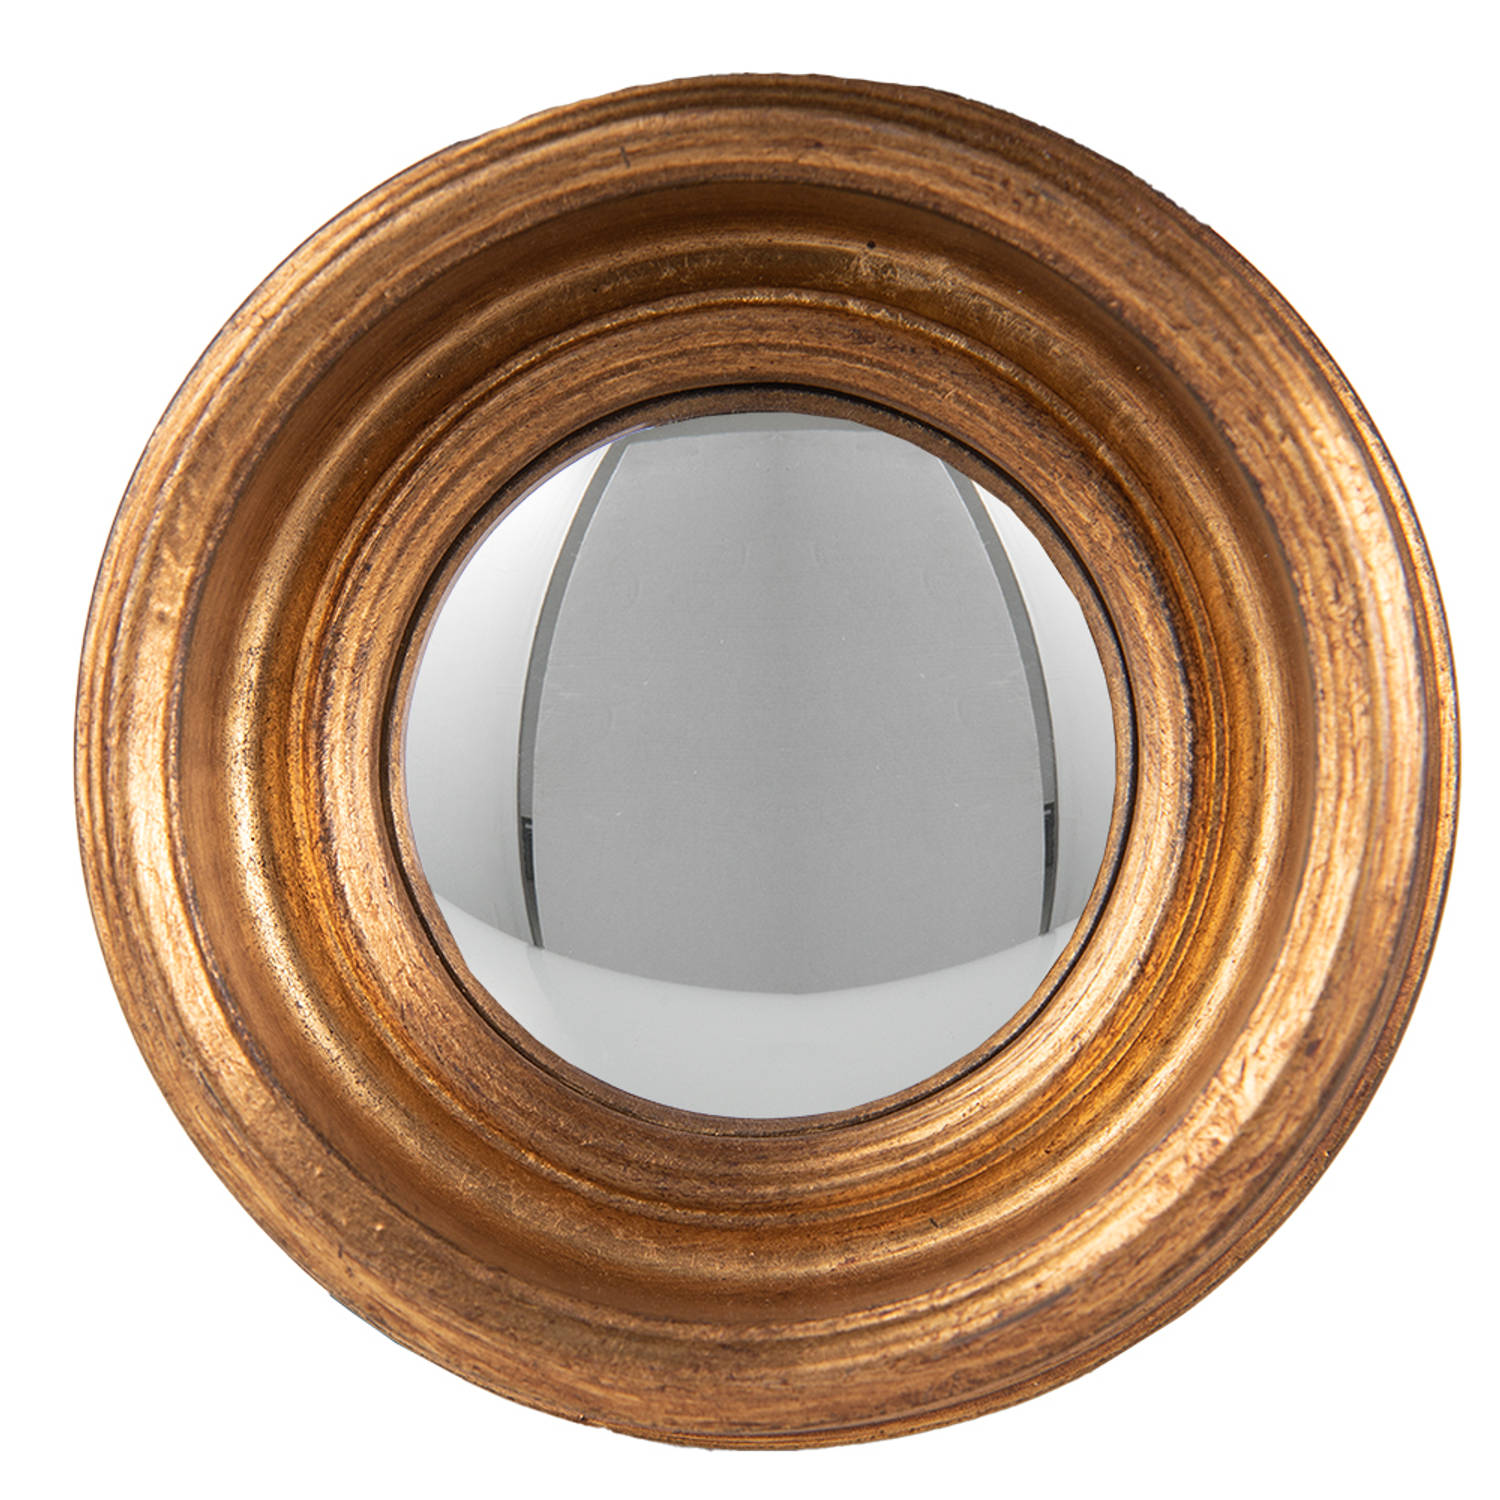 HAES DECO - Bolle ronde Spiegel - Kleur Goudkleurig - Formaat Ø 24x7 cm - Materiaal Kunststof - Wandspiegel, Spiegel rond, Convex Glas